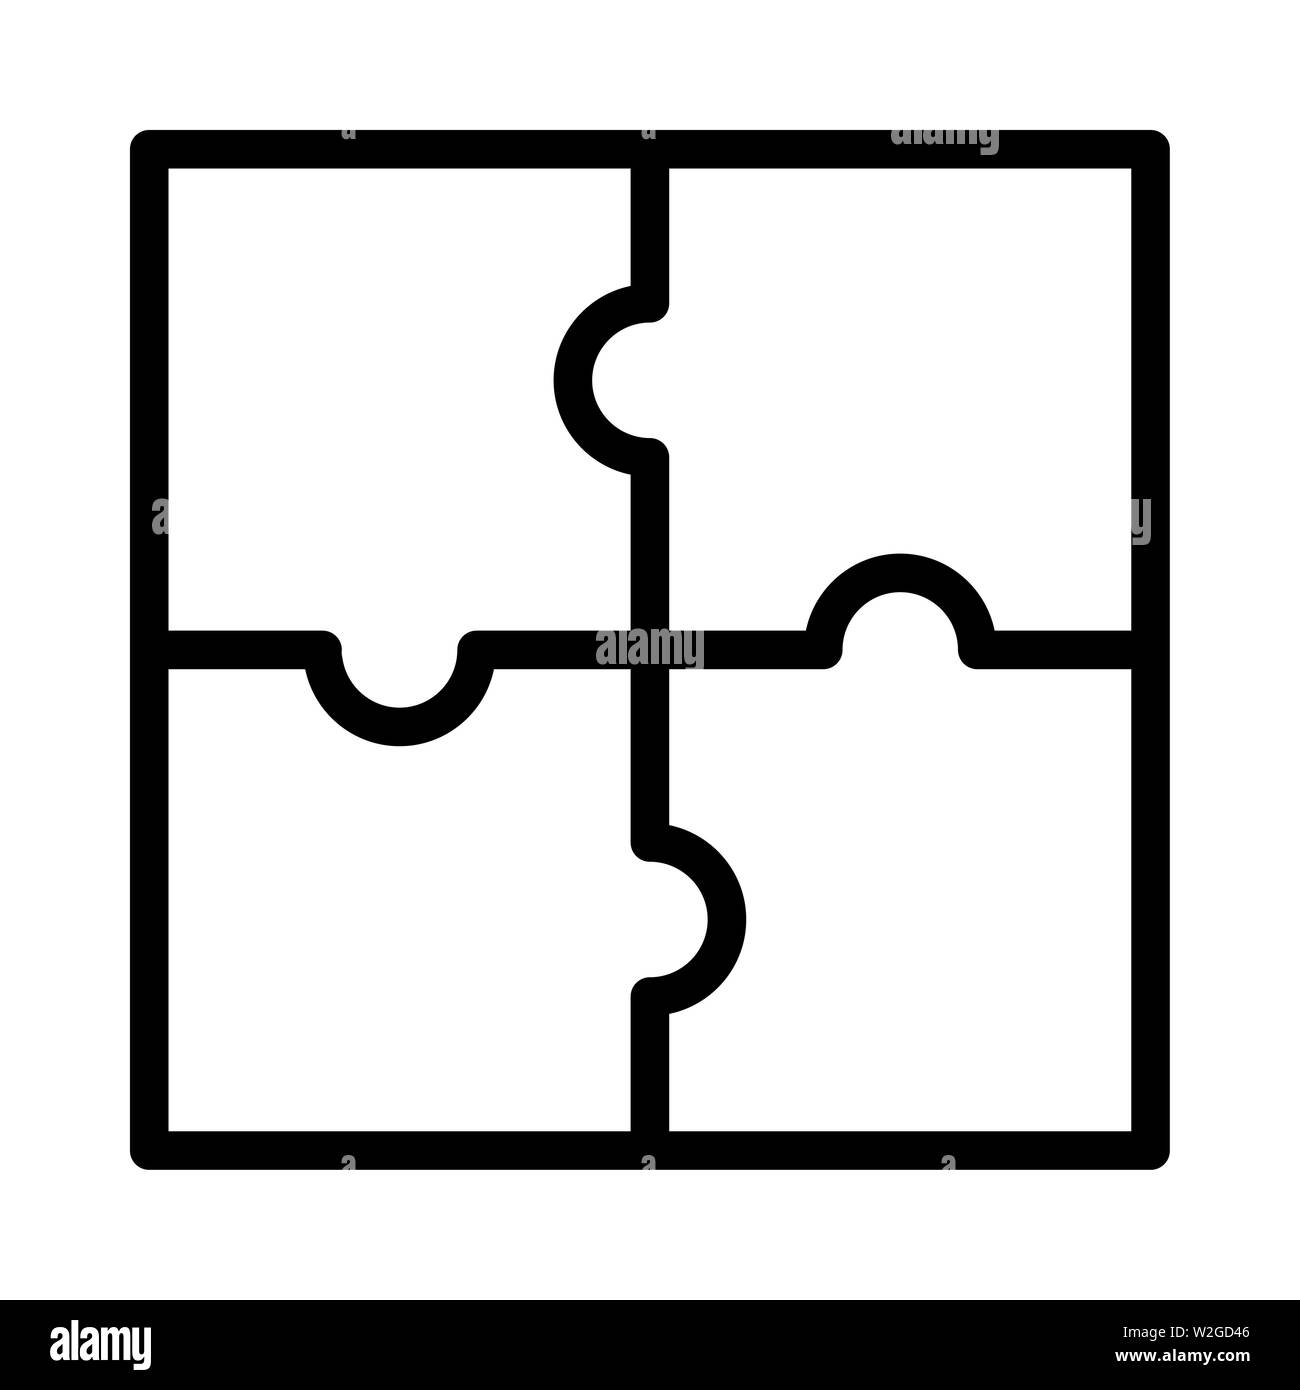 jigsaw puzzle icon. flat illustration of jigsaw puzzle icon for web,  pattern, design, etc Stock Photo - Alamy